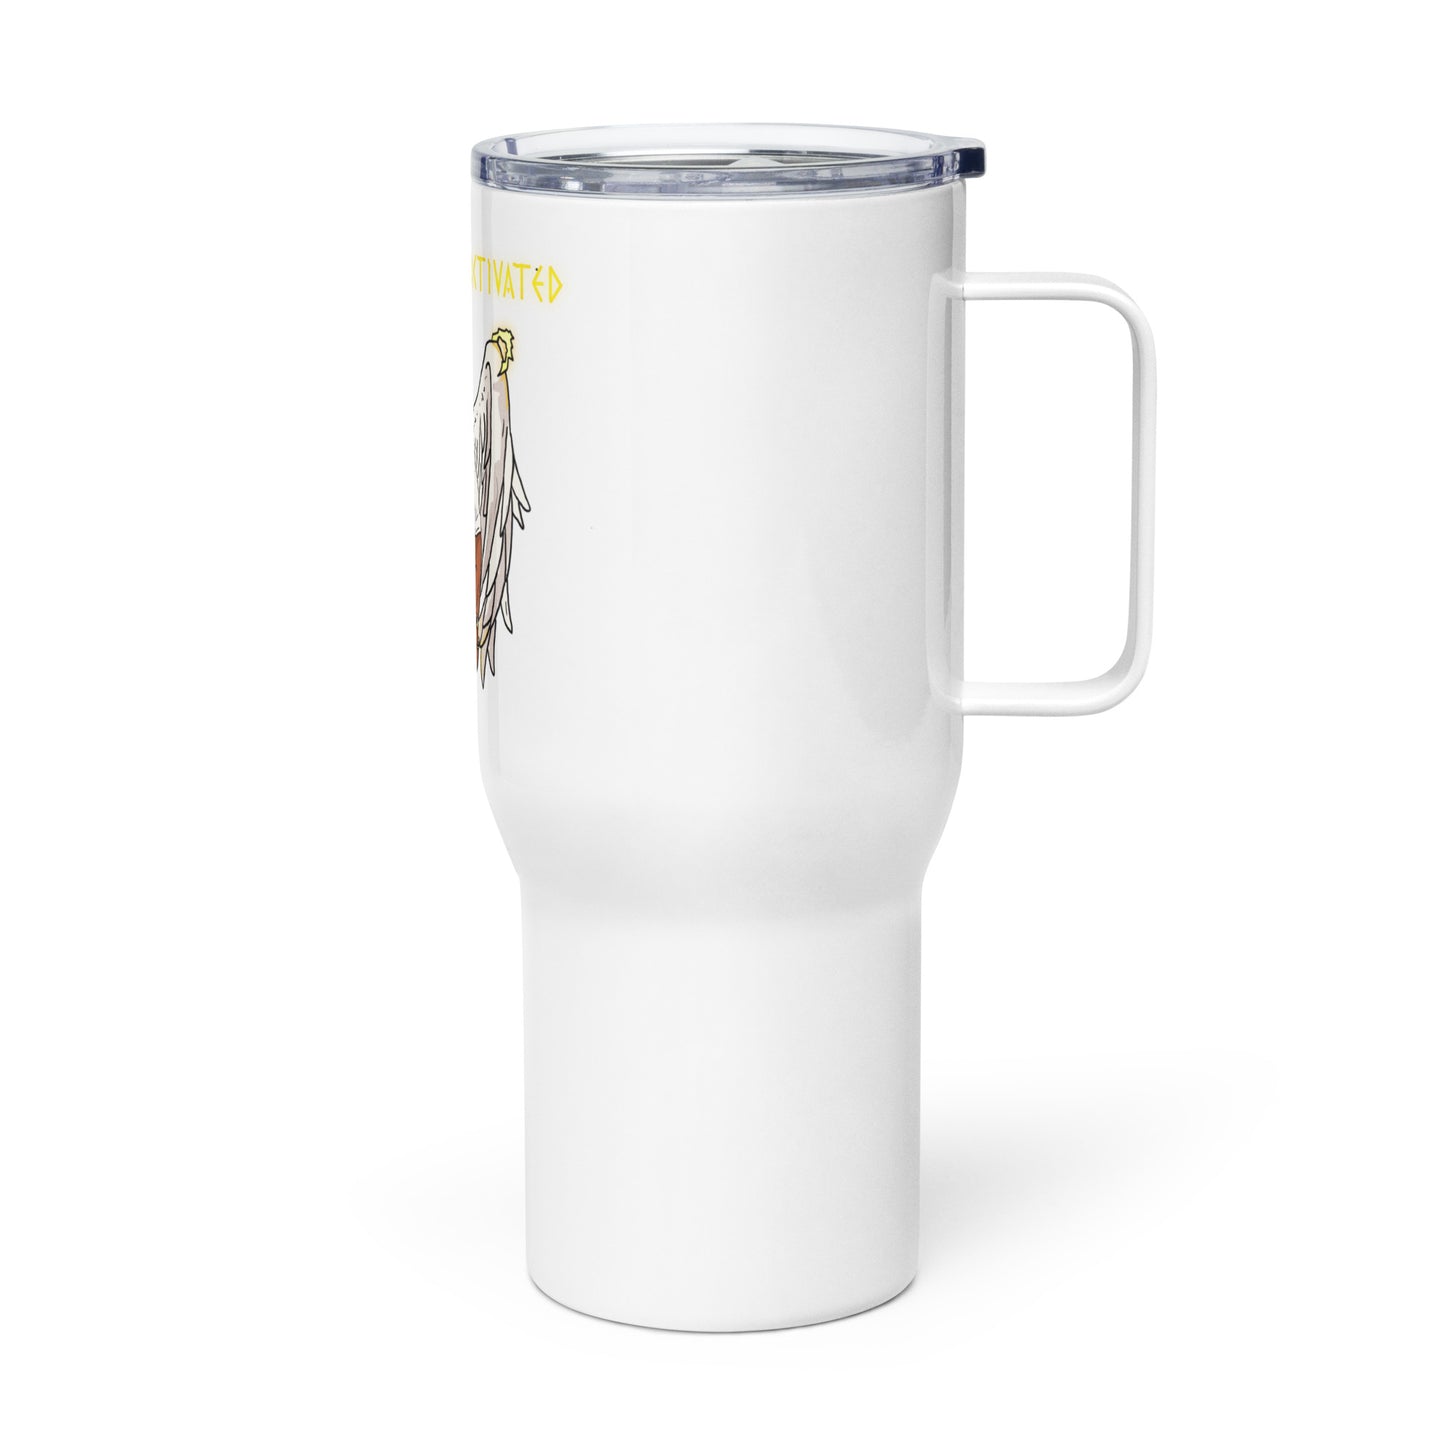 N.M.A. Travel mug with a handle